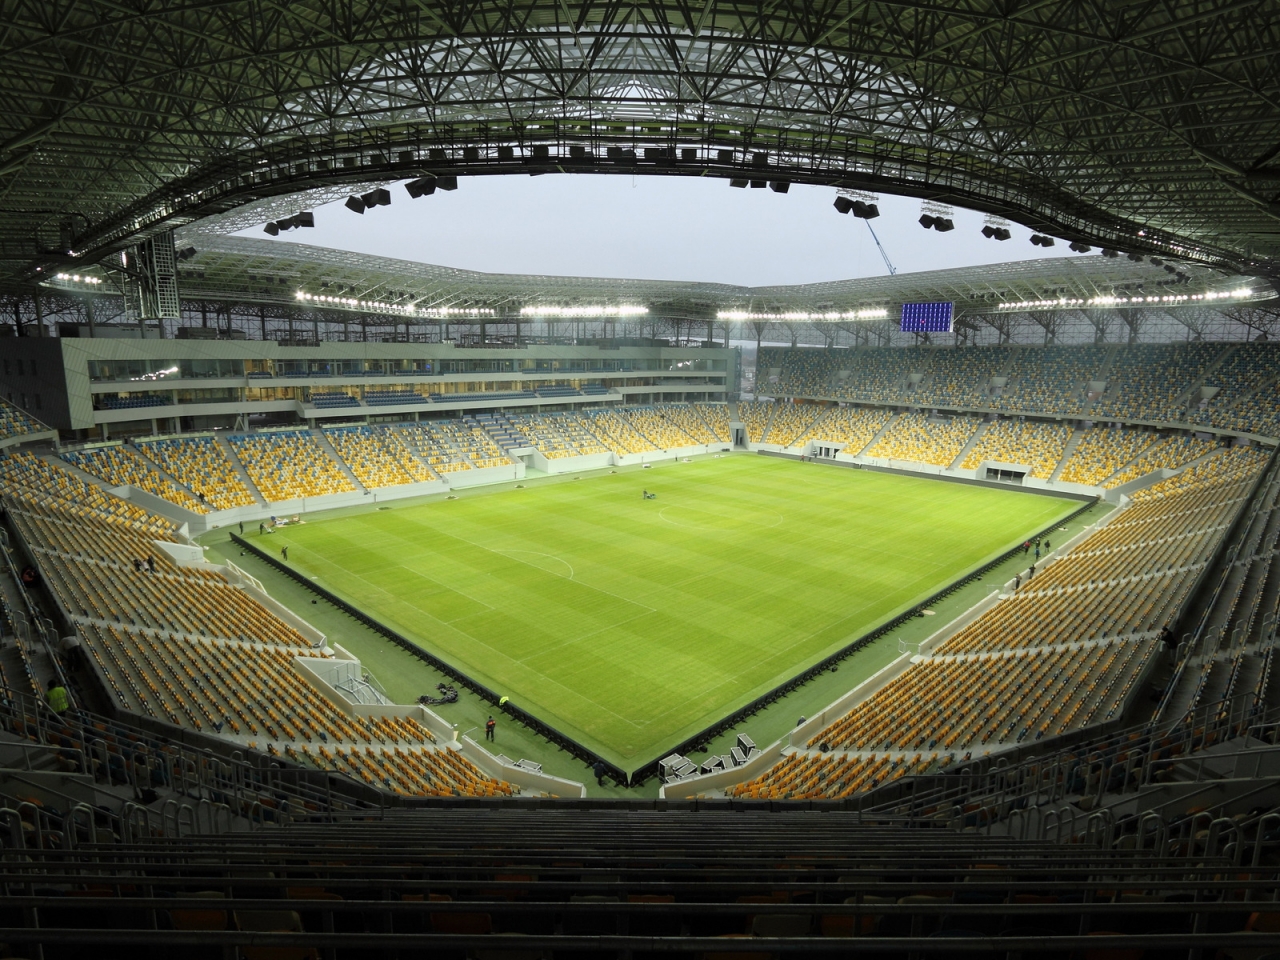 Empty Stadium for 1280 x 960 resolution